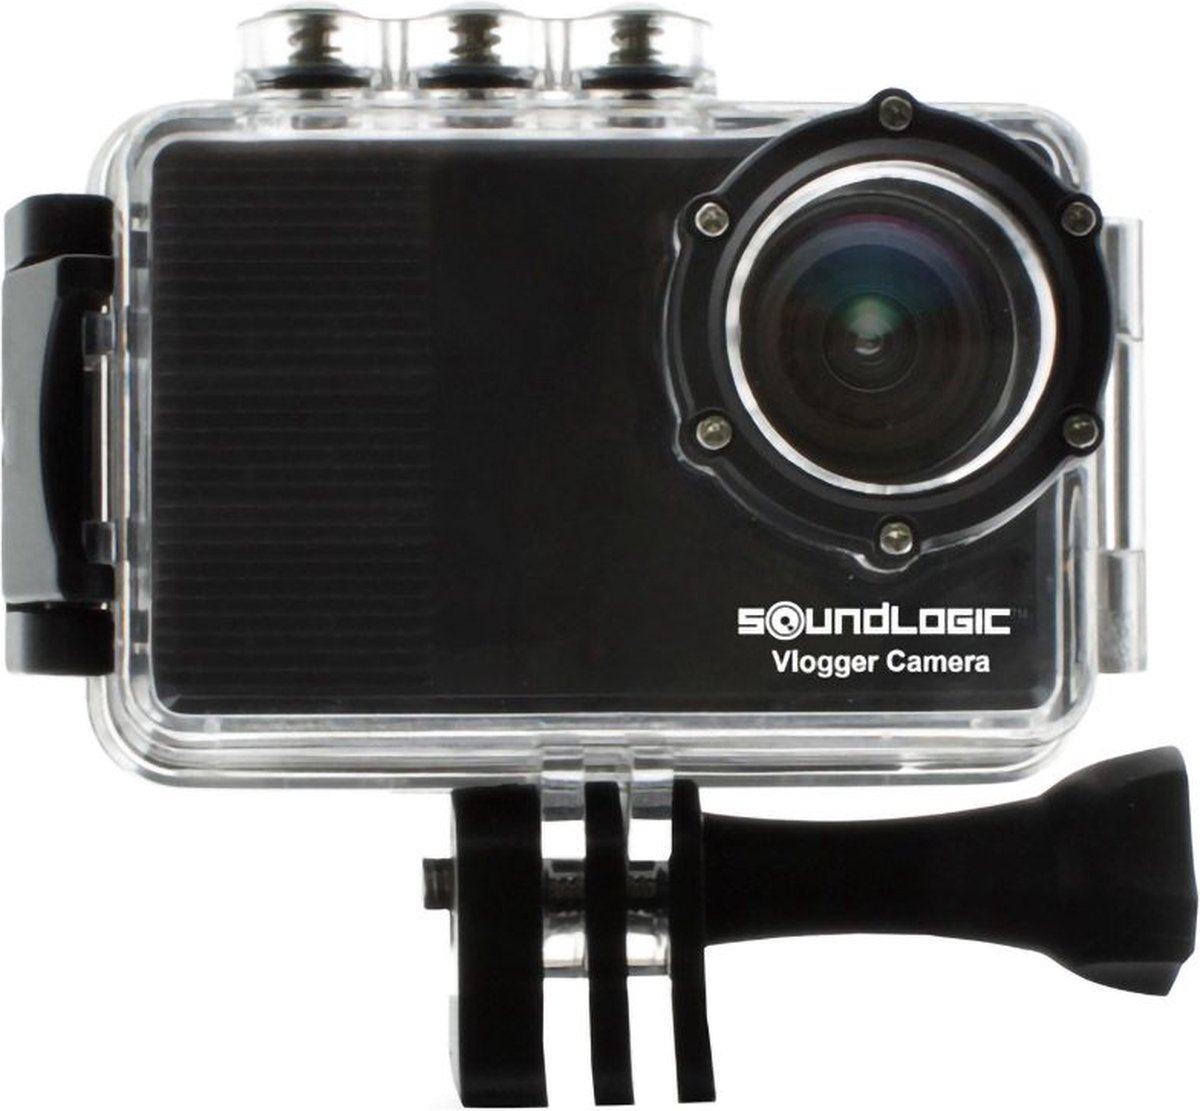 Goedaardig verkoper eend Soundlogic Vlog Camera - Vlogger - Trendy Gadget - Selfie Cam | bol.com